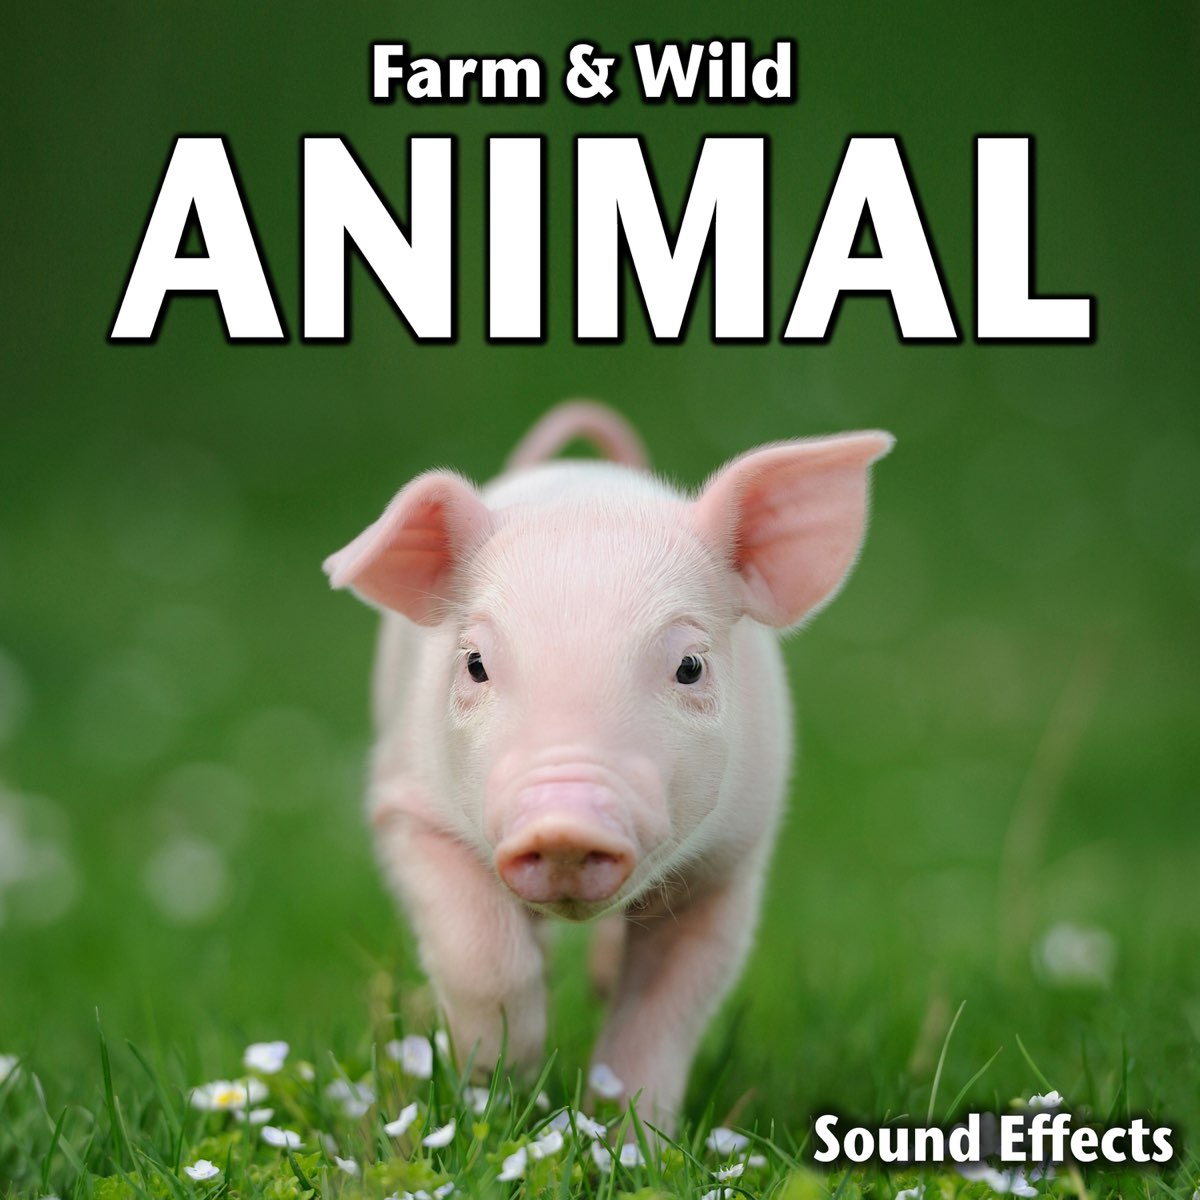 Farm & Wild Animal Sound Effects by Sound Ideas on Apple Music